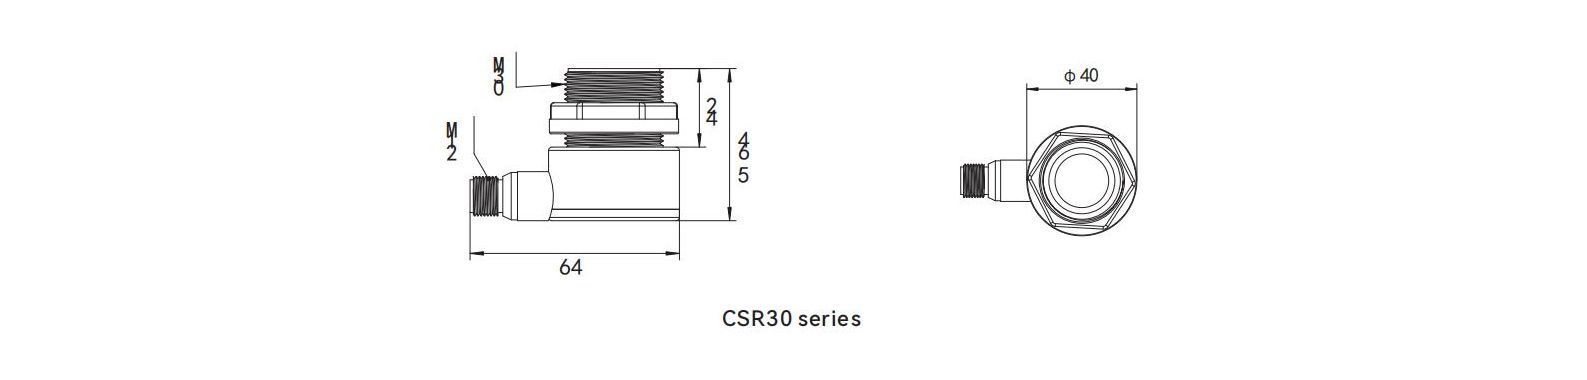 Ultrasonic Sensor Price CSR30 Series Dimensions